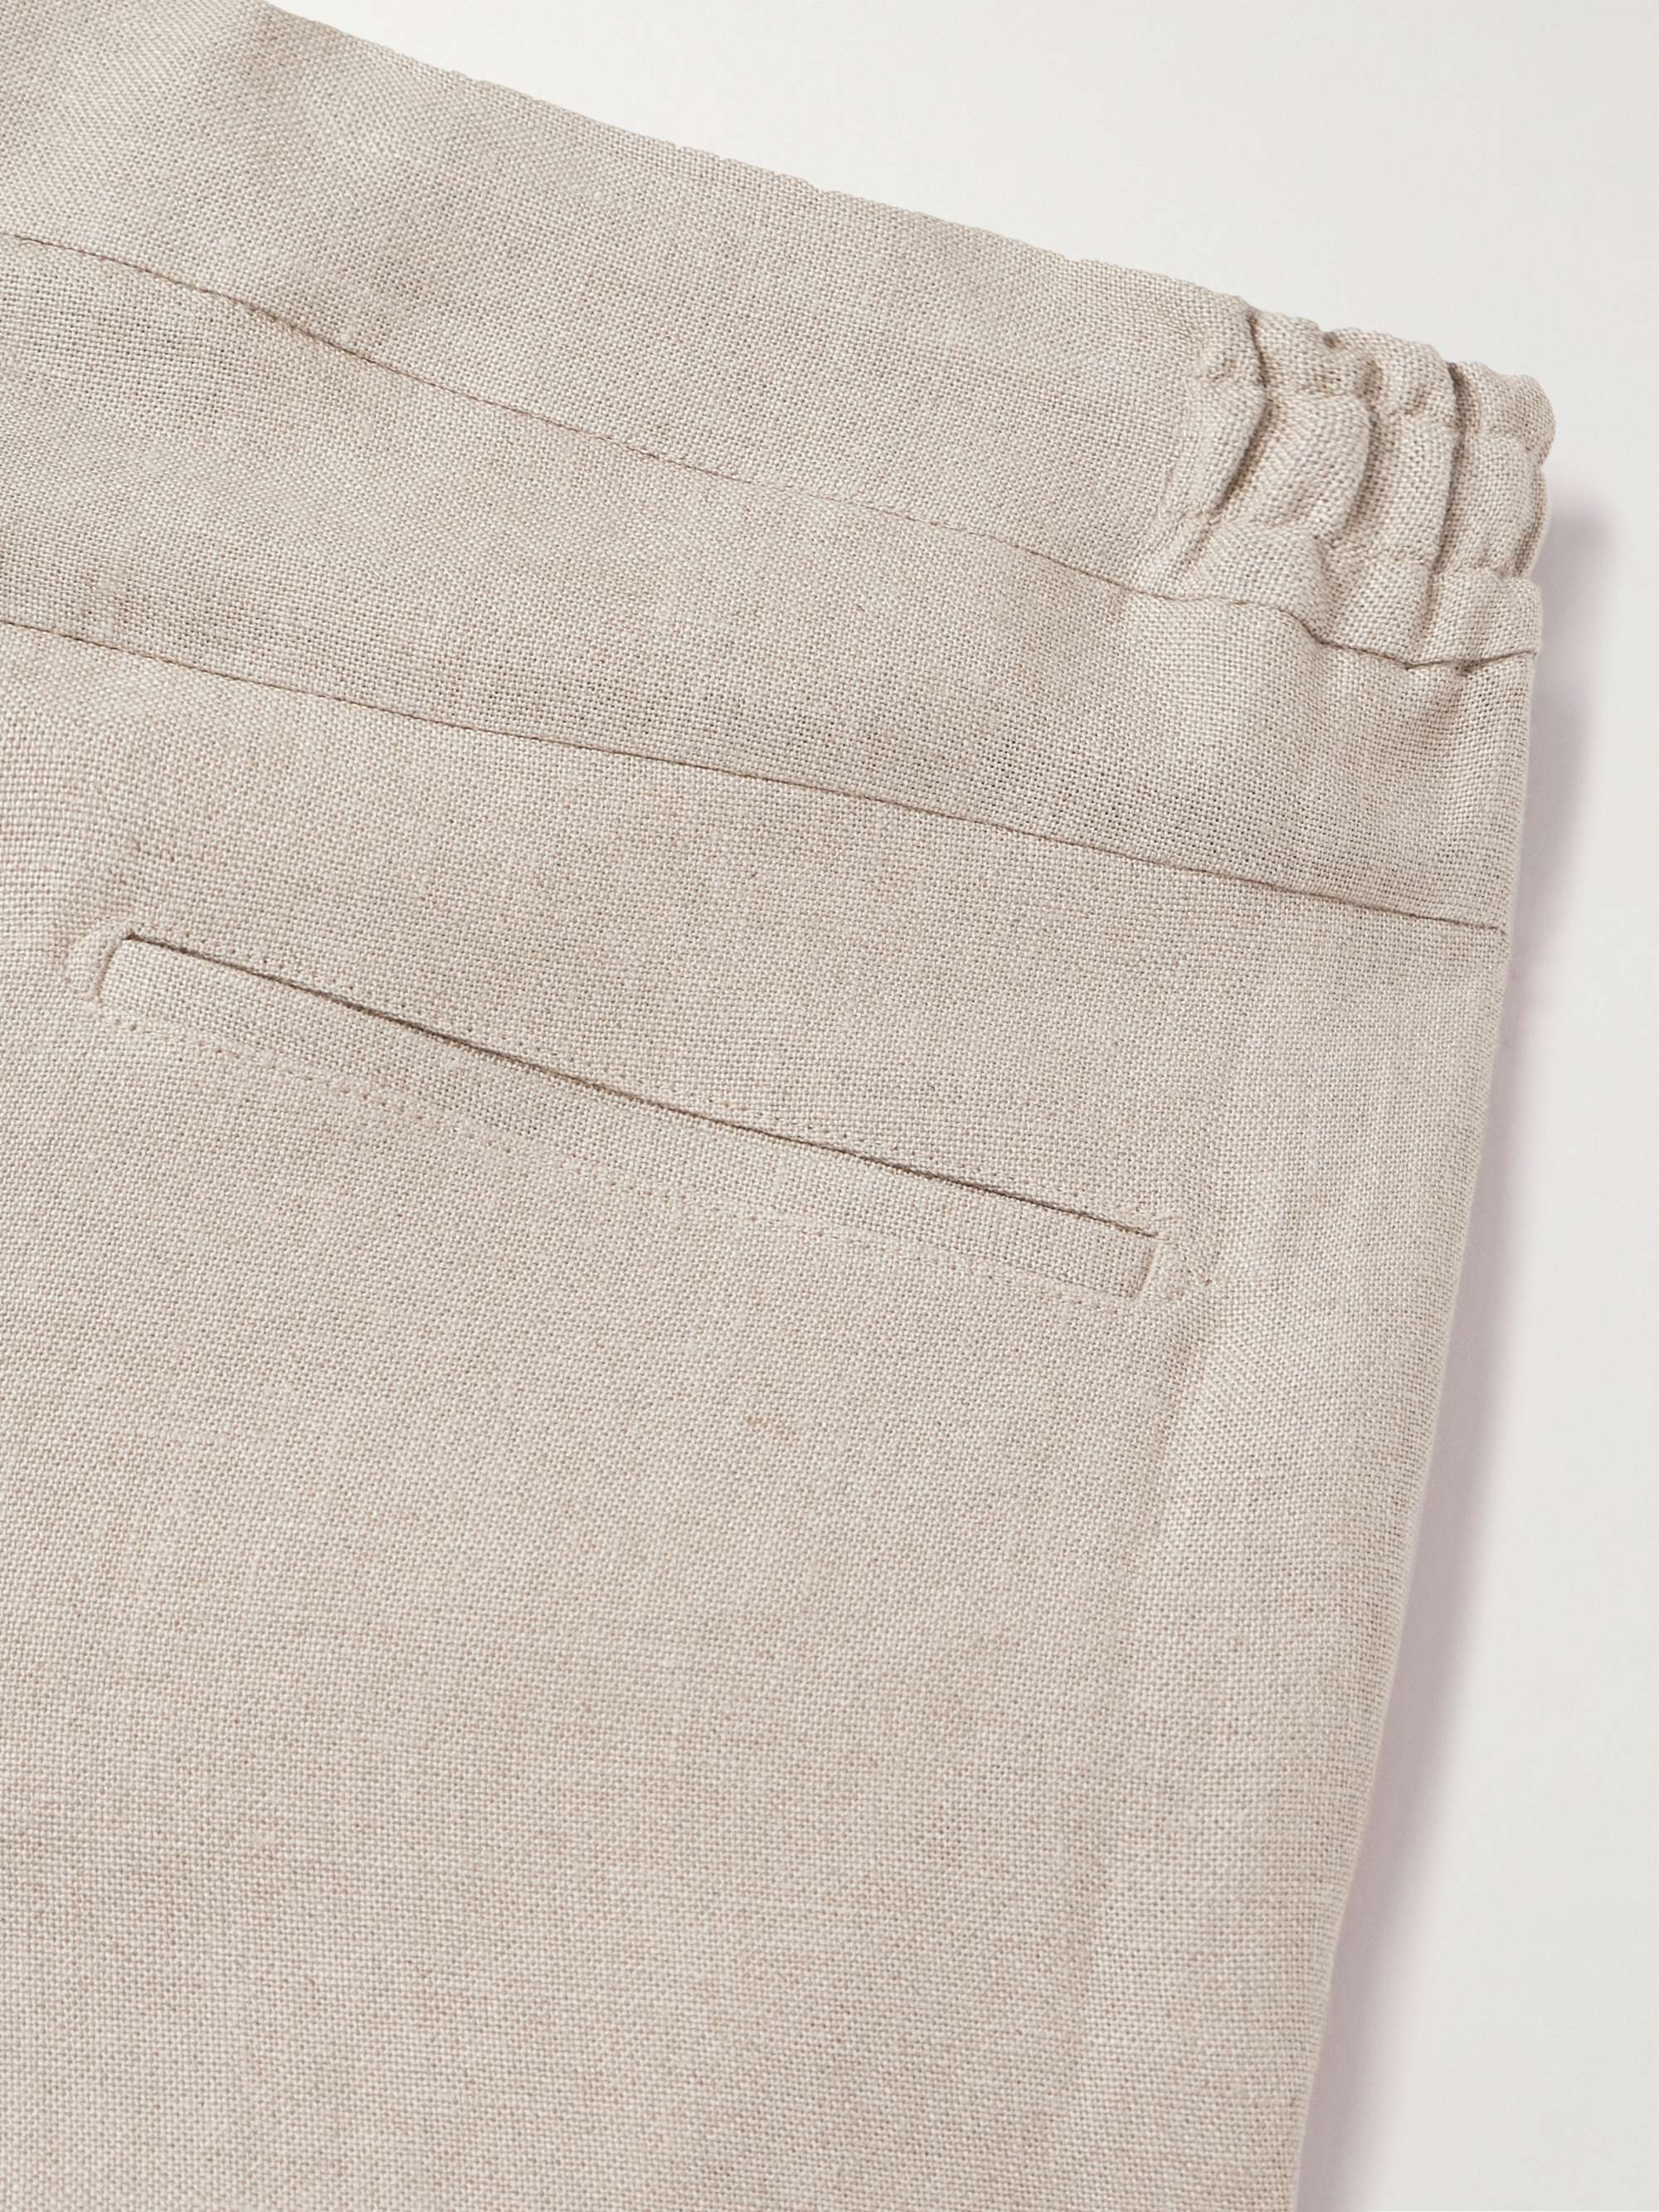 DE PETRILLO Tapered Linen Drawstring Trousers